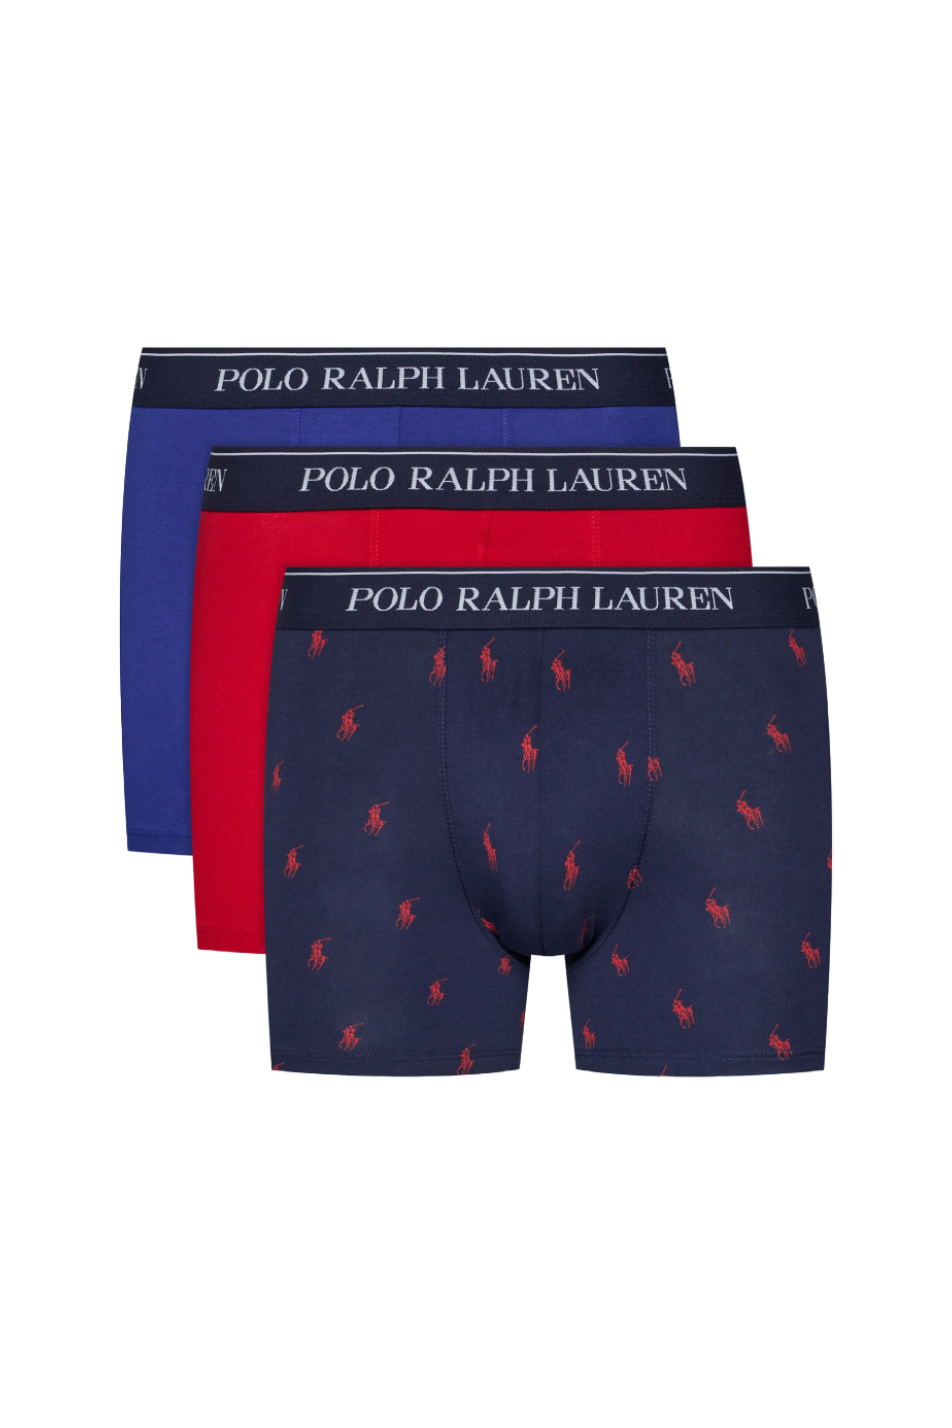 Polo Ralph Lauren 3 Pack Men's Boxer Brief